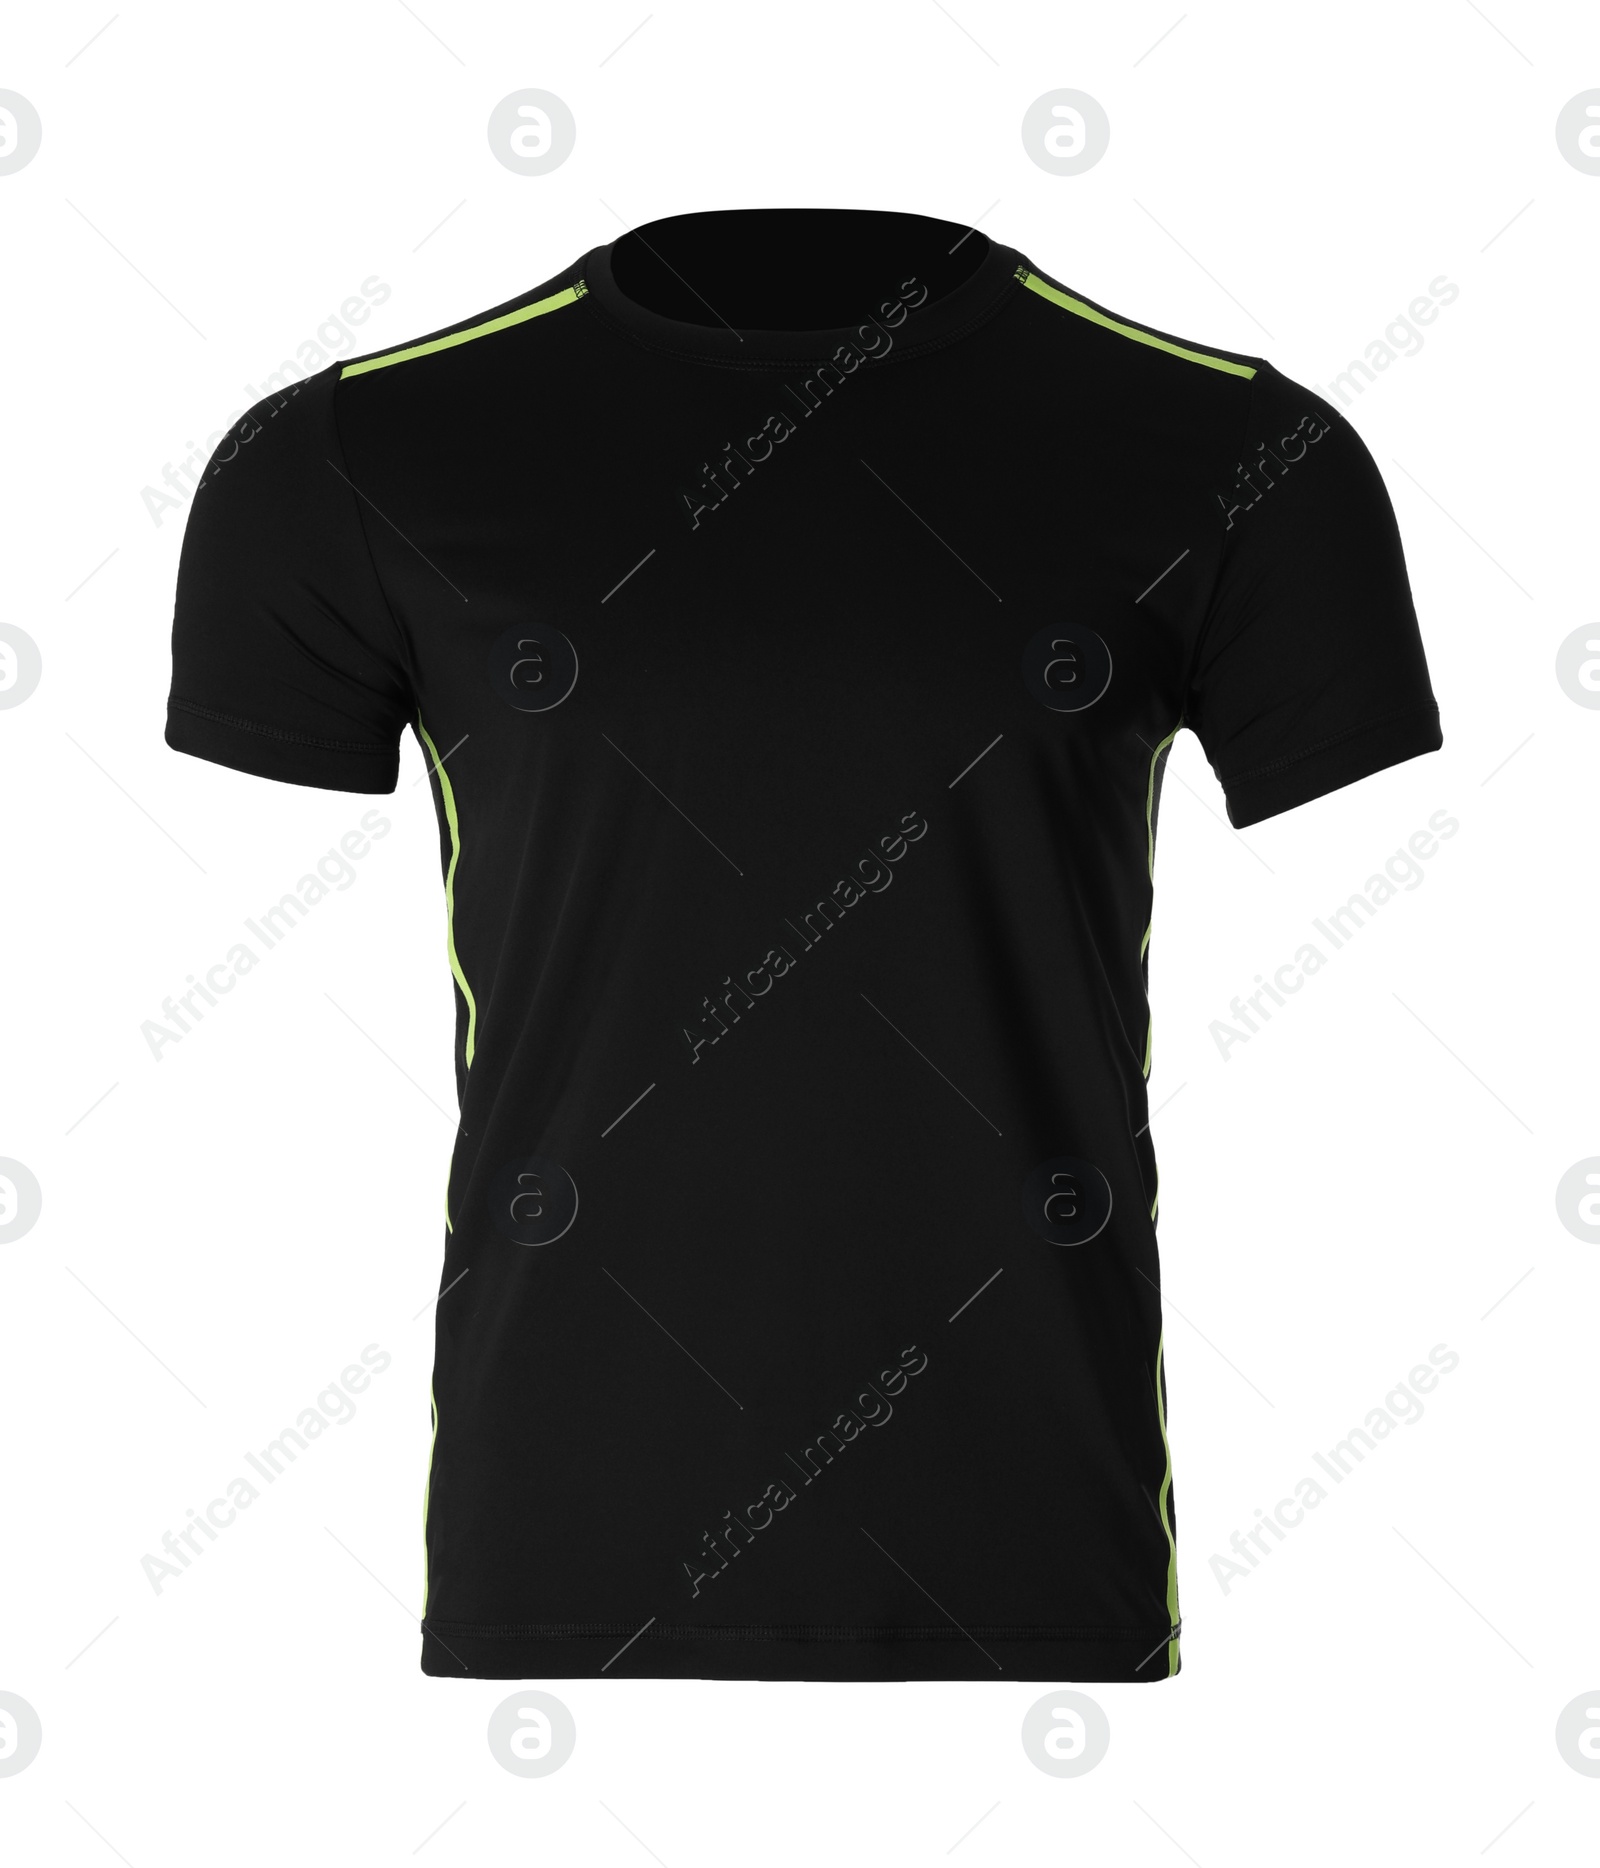 Photo of Black men's t-shirt isolated on white. Sports clothing